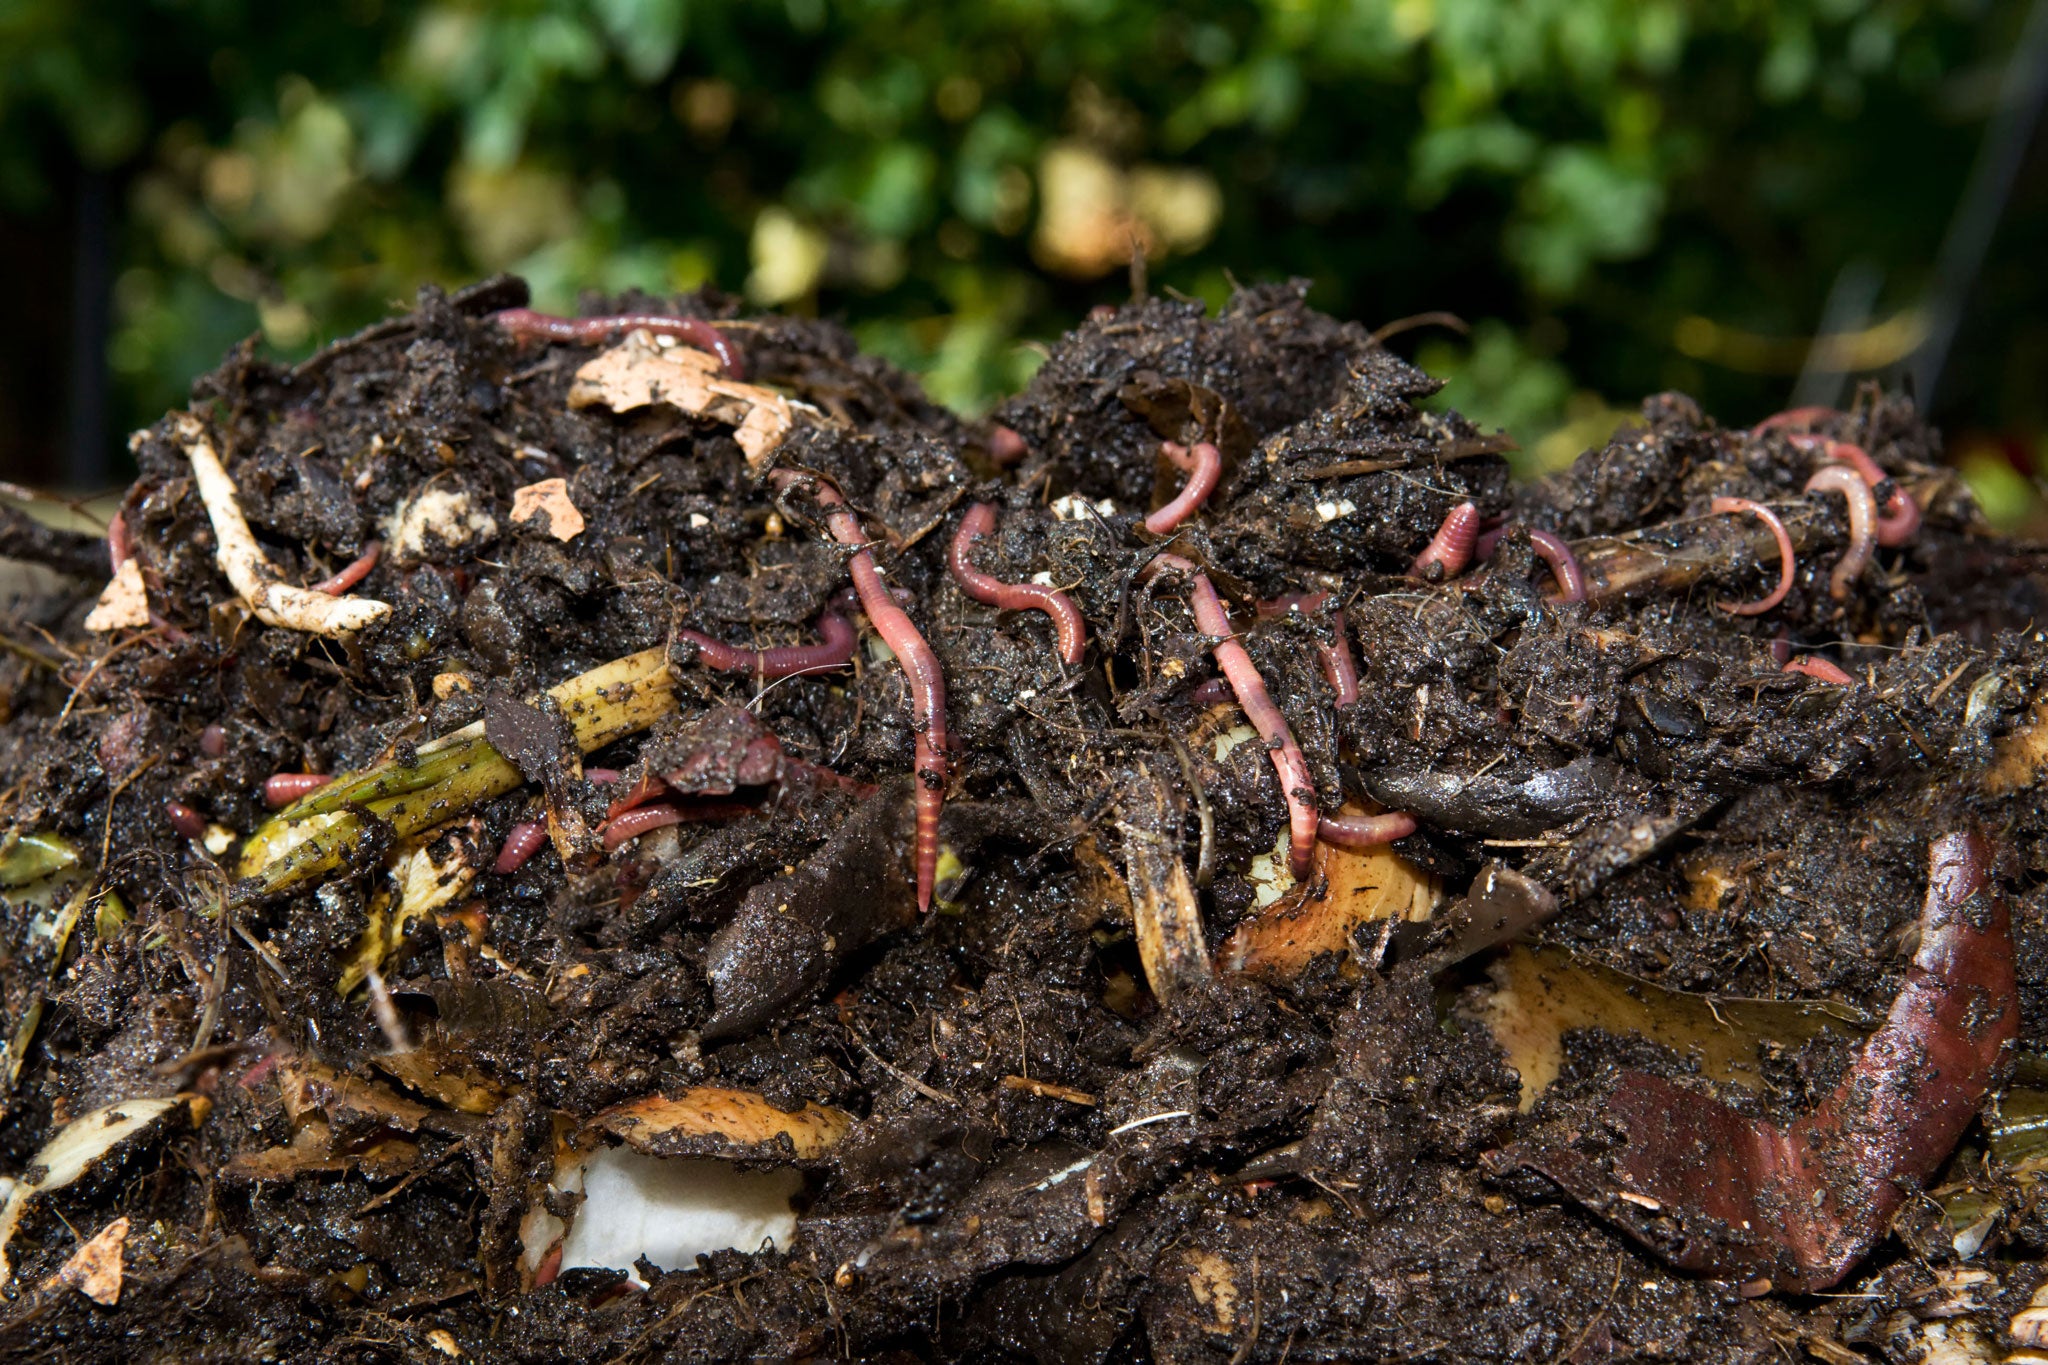 Freshly-dug homemade compost full of worms